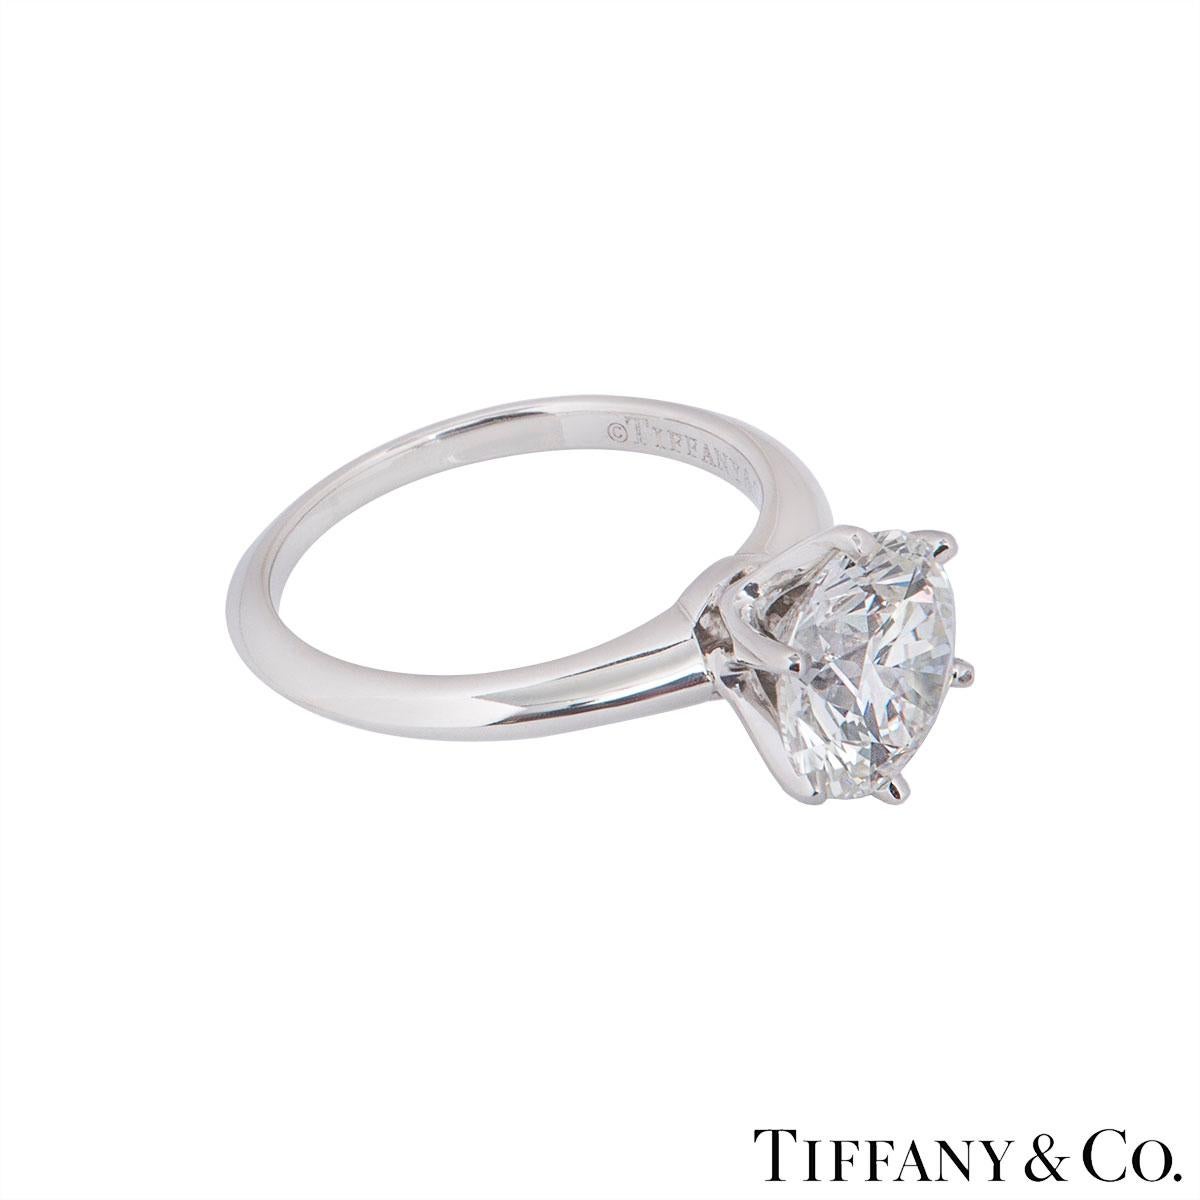 2.7 carat diamond ring tiffany price